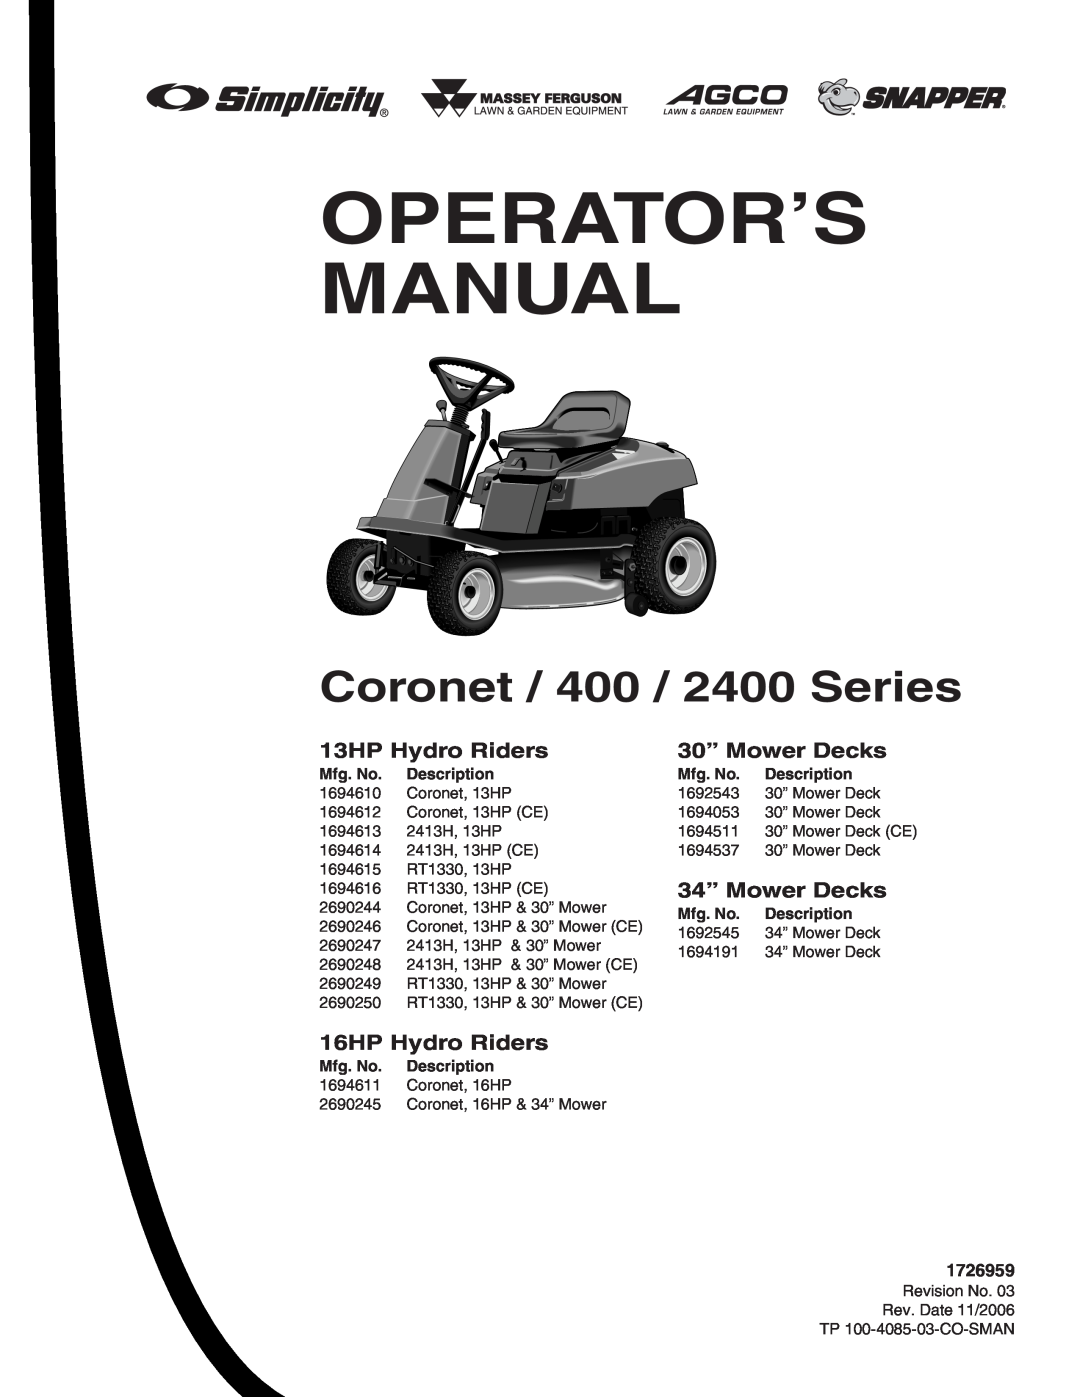 Snapper manual Operator’S Manual, Coronet / 400 / 2400 Series 